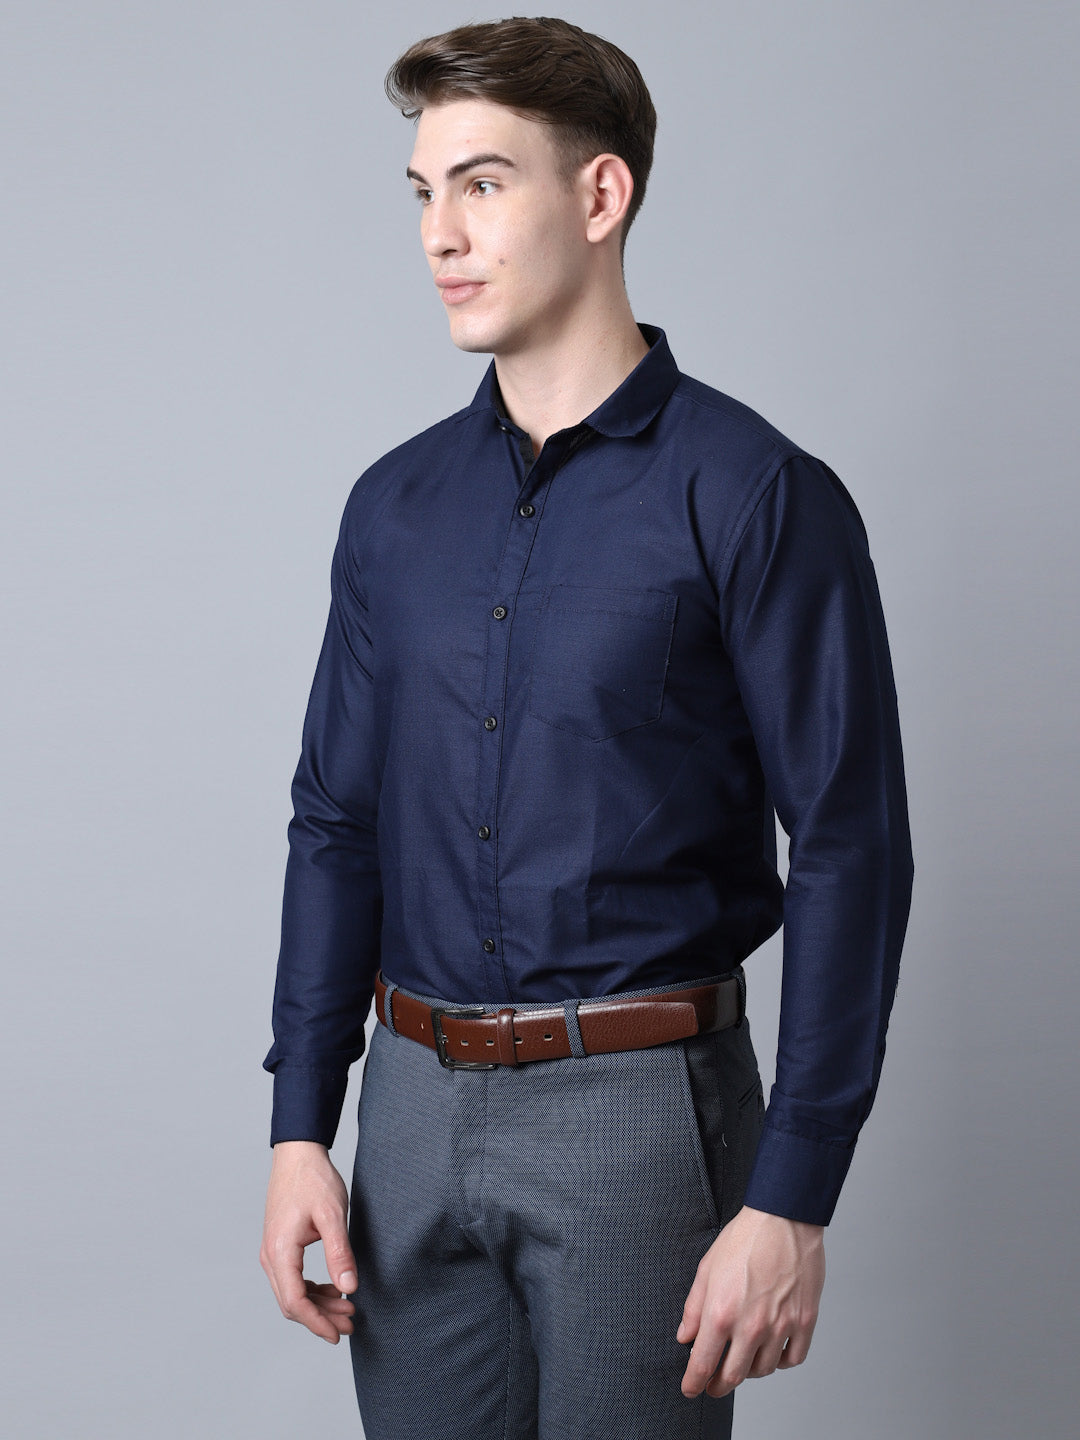 Majestic Man Versatile Solid Formal Shirt - Navy Blue